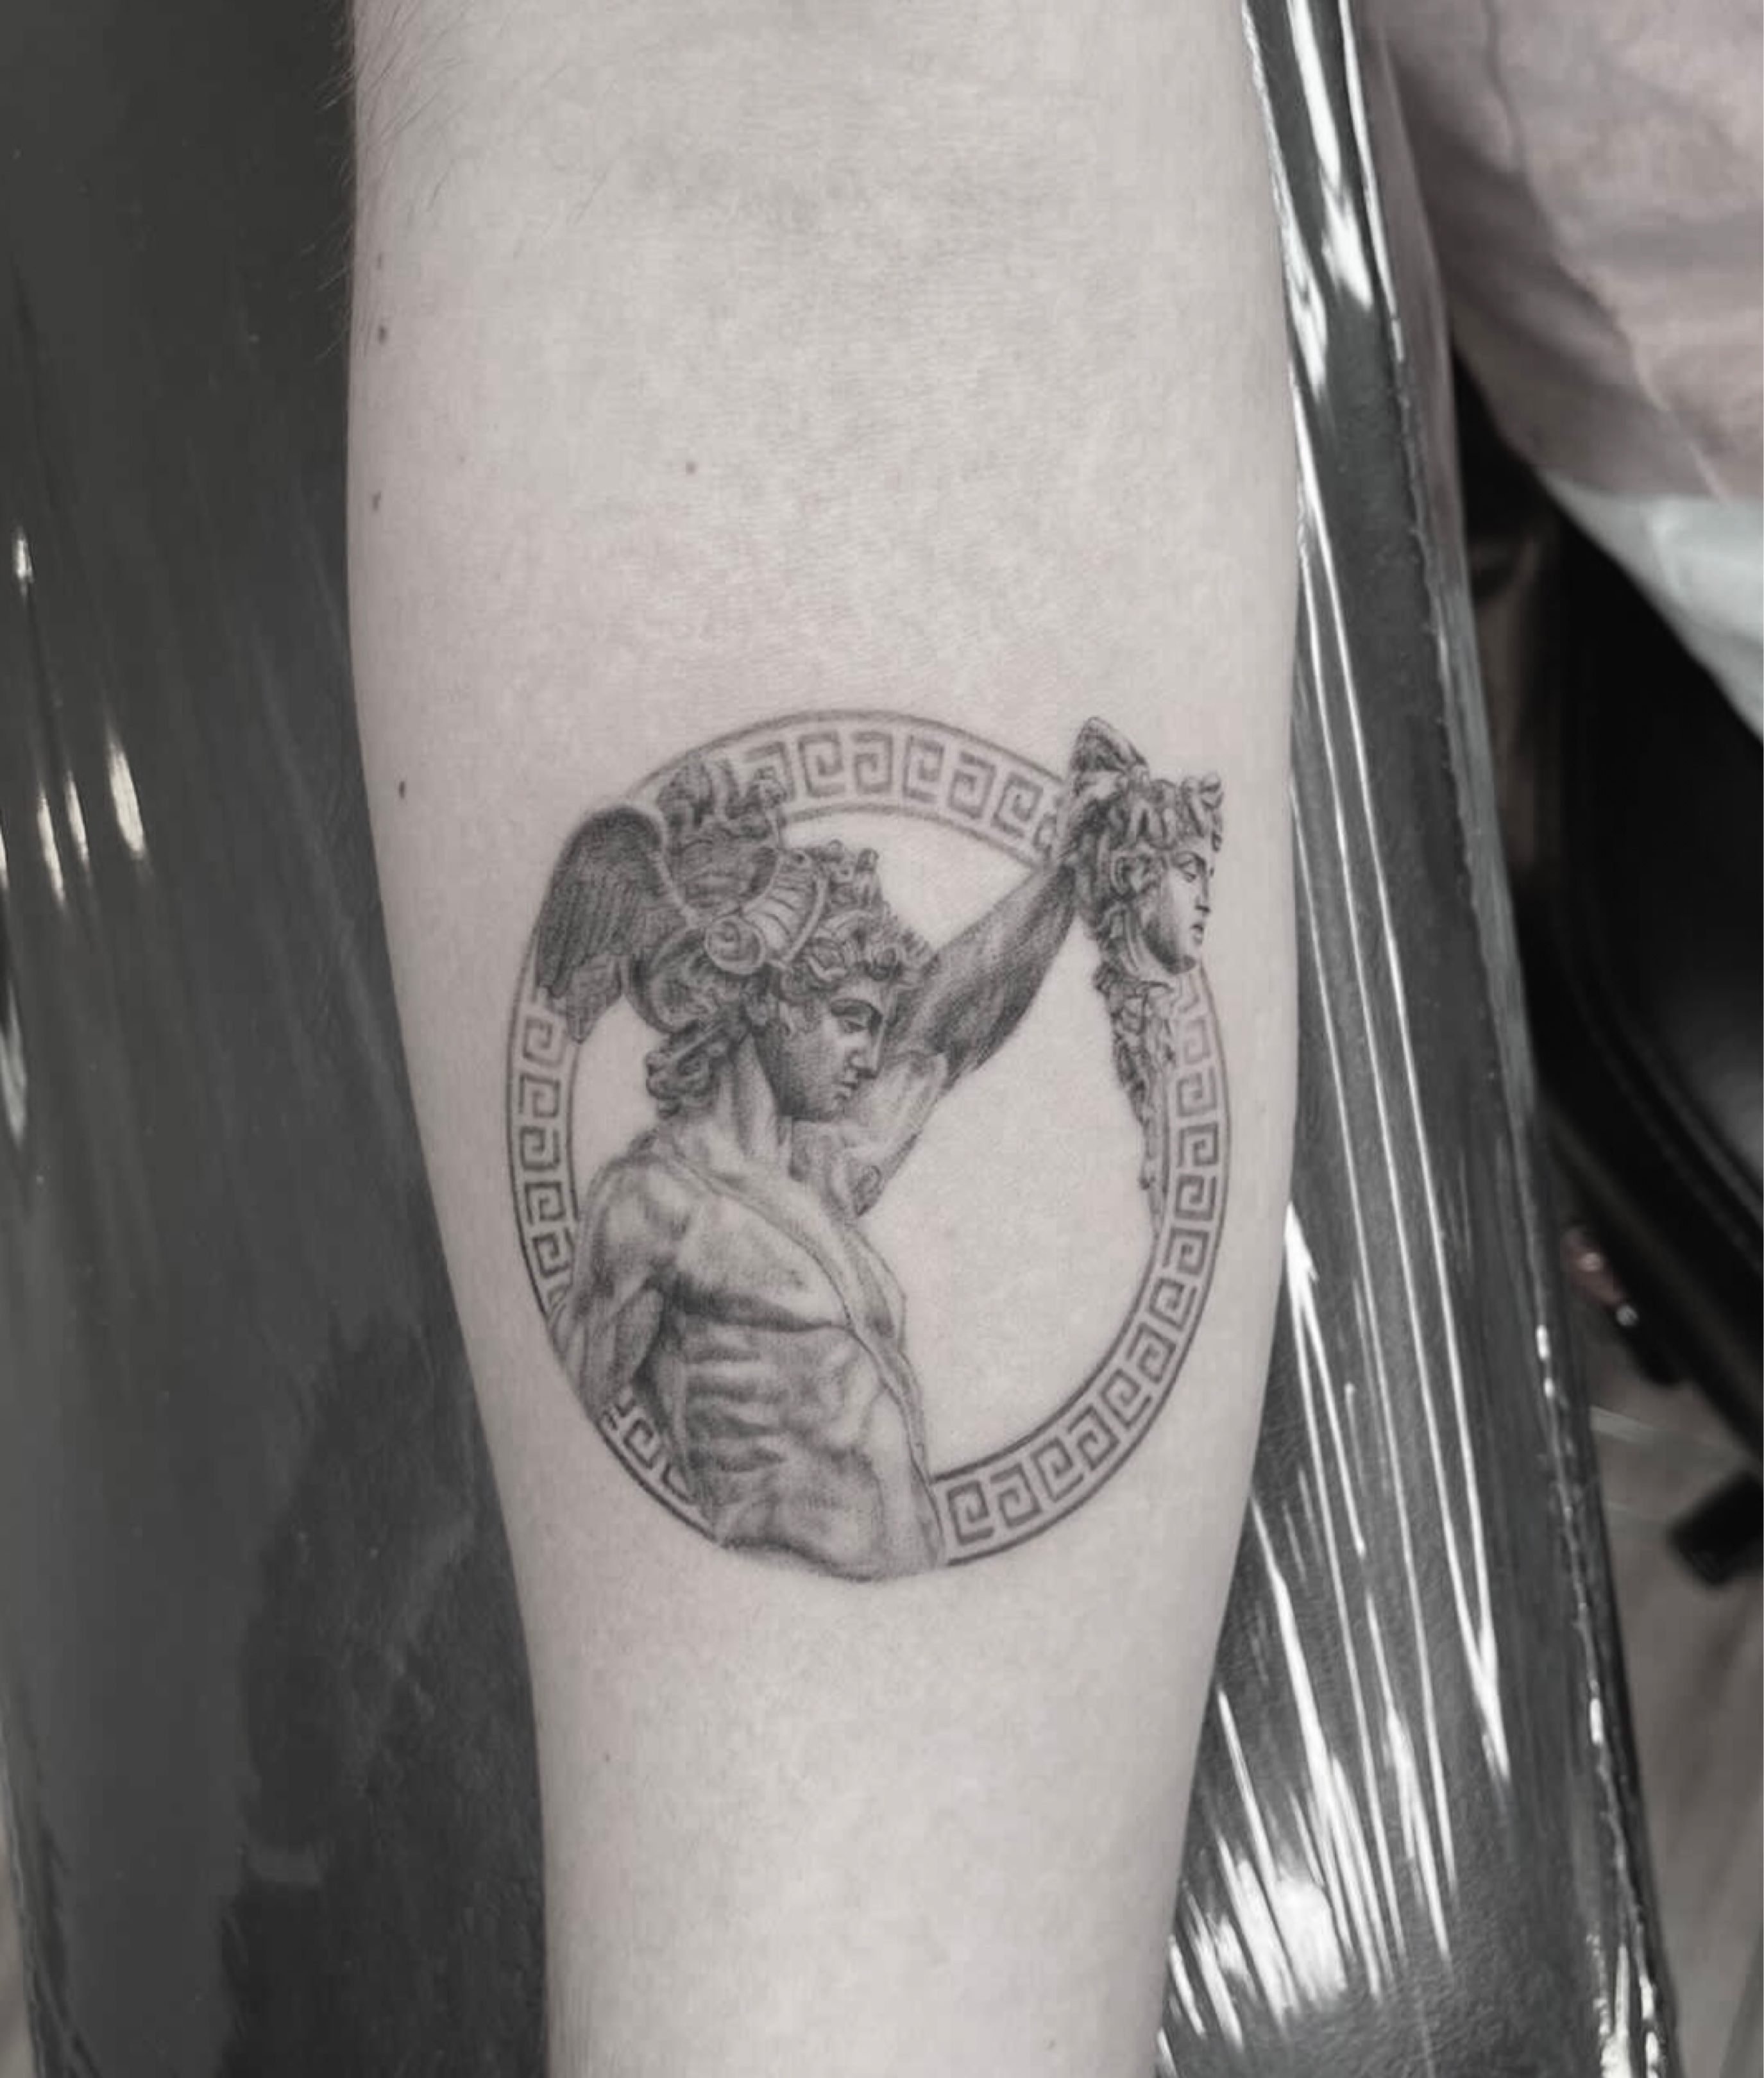 Scandinavian mythology tattoo